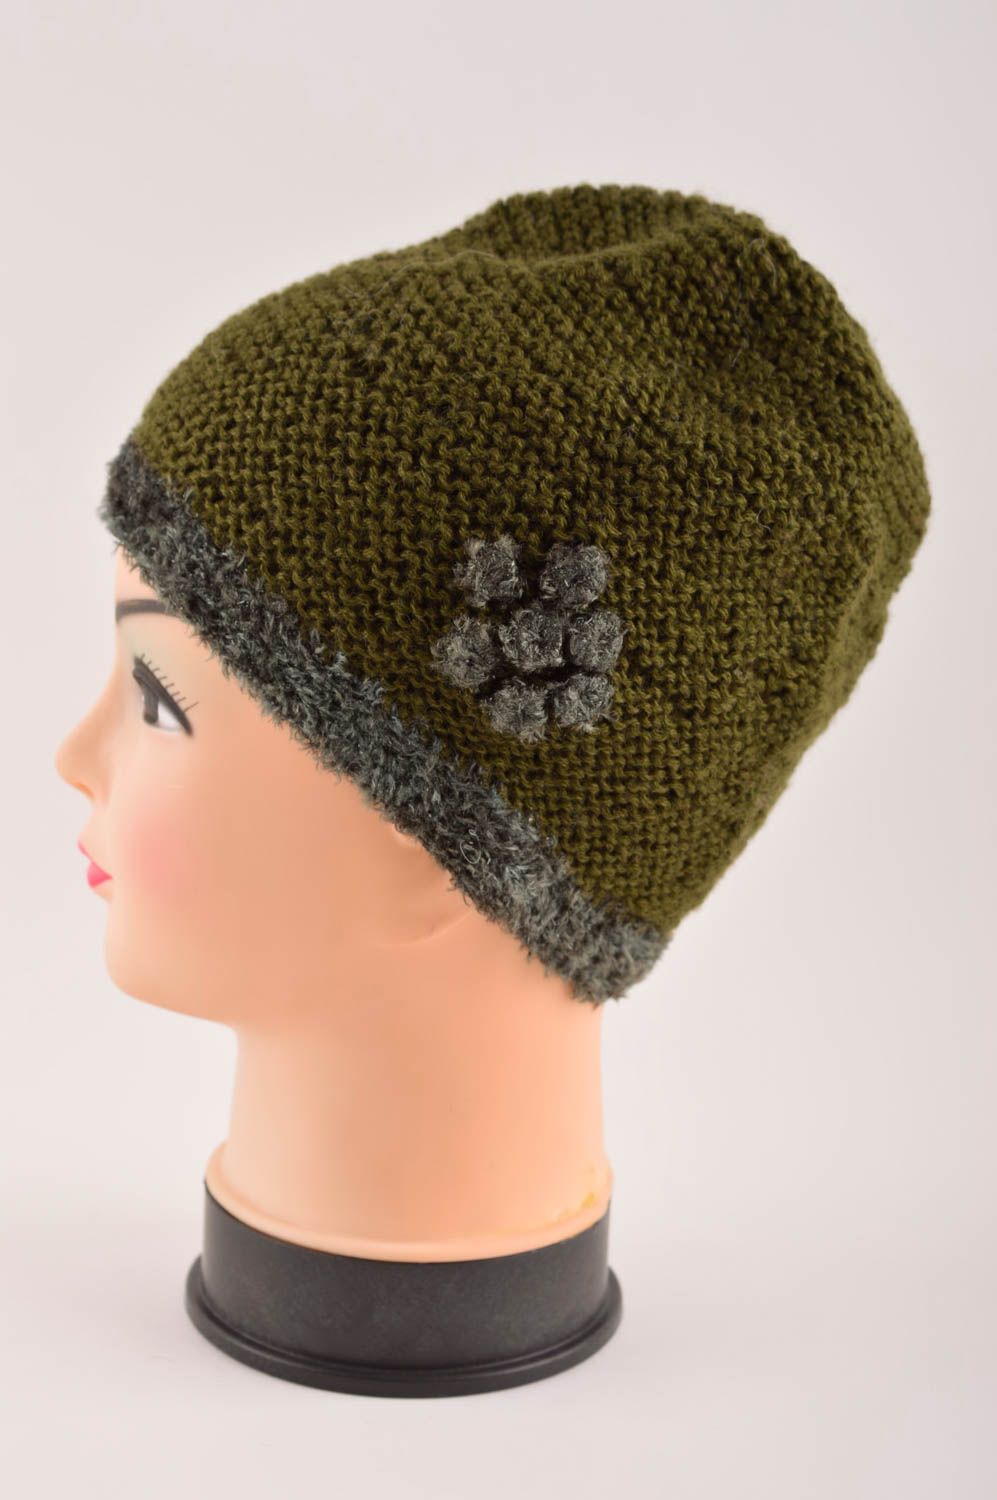 Handmade hat designer hat warm winter hat unusual hat for girl crocheted hat photo 3